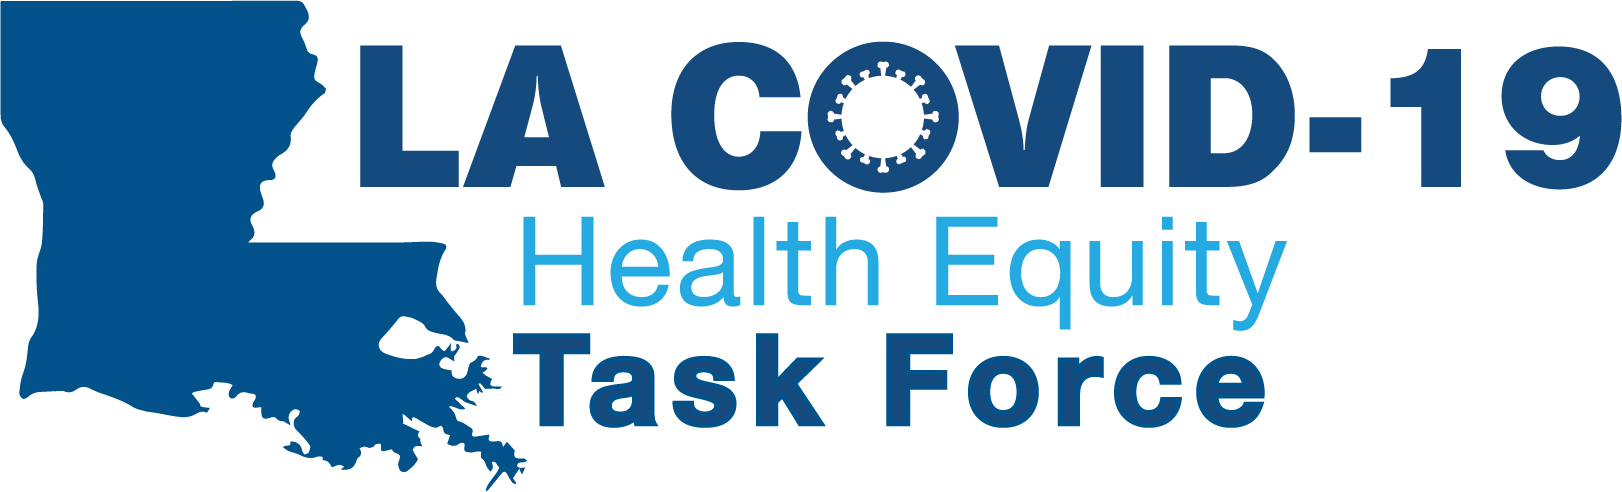 LA Covid-19 Health Equity Task Force Logo